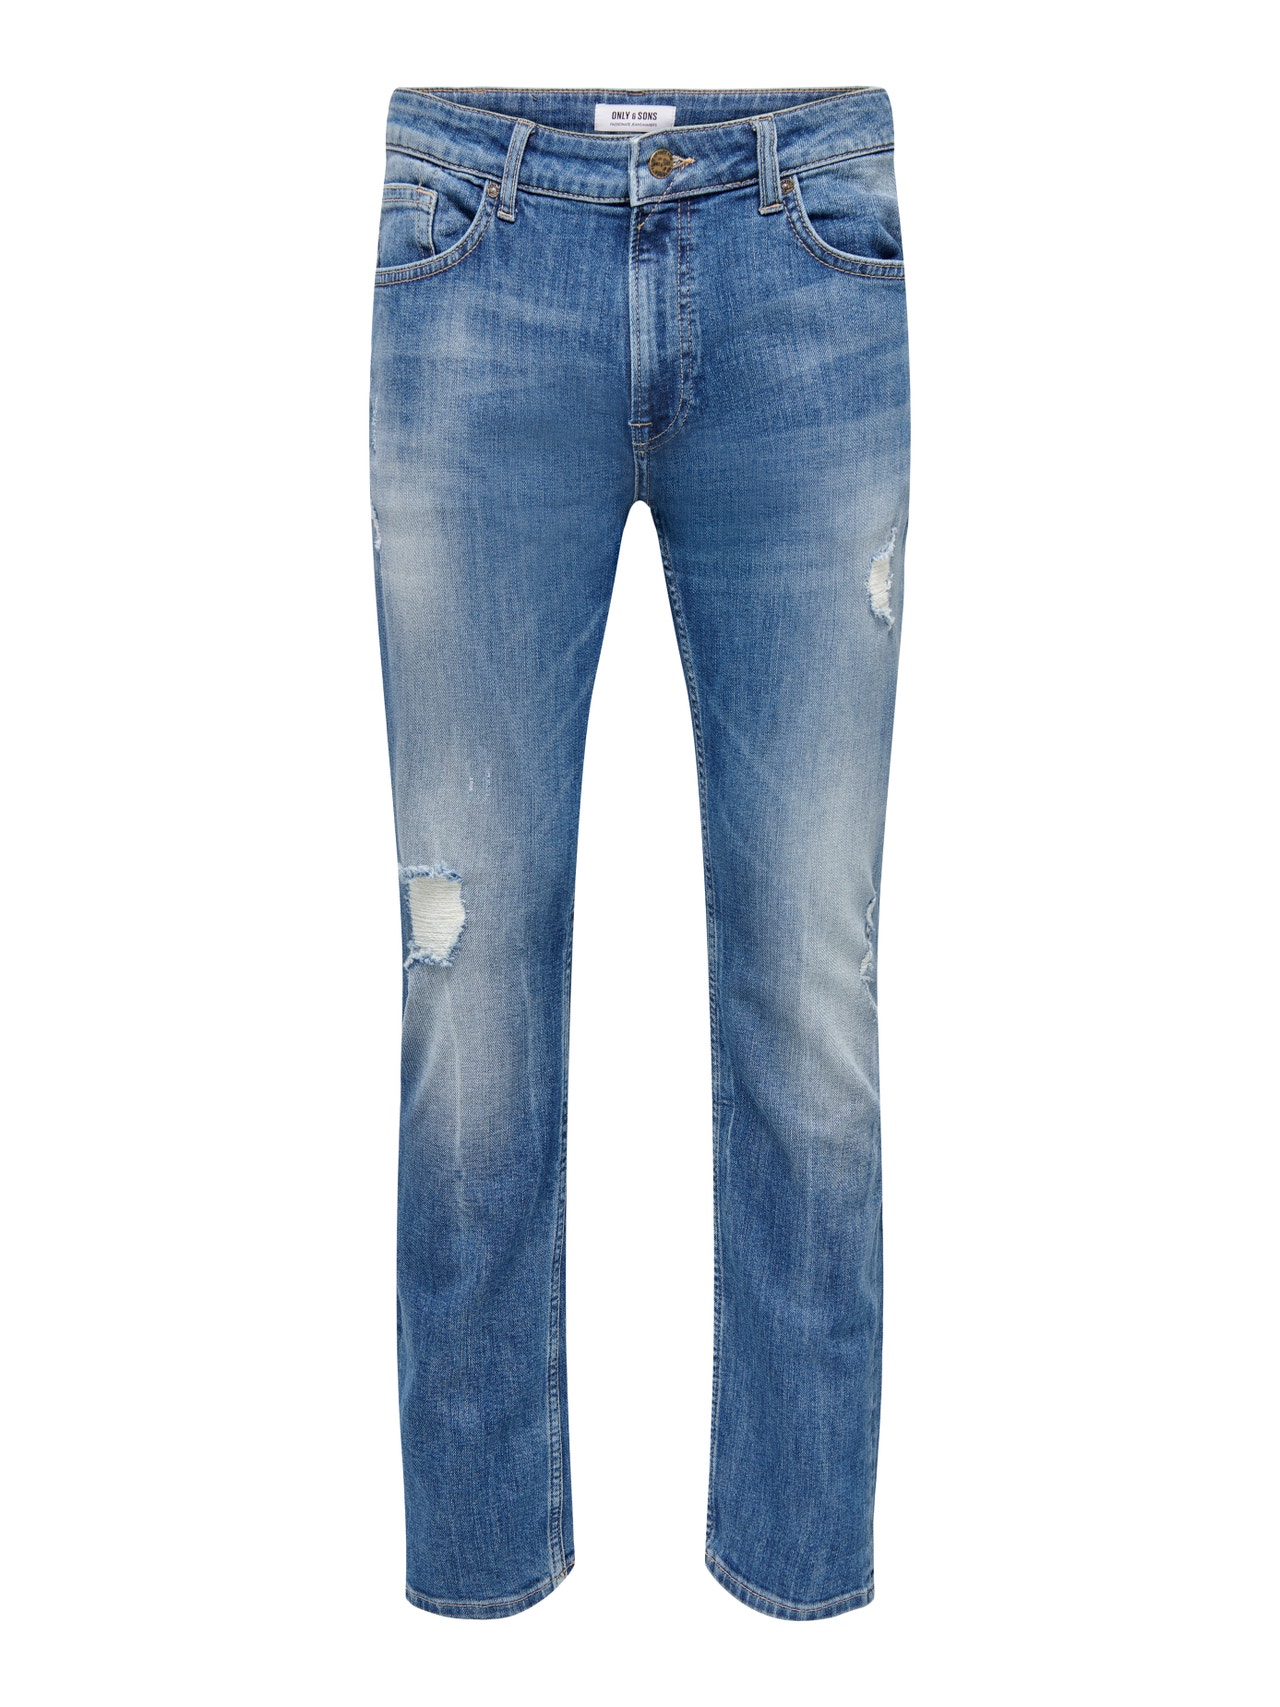 ONLY & SONS Jeans Regular Fit Taille moyenne Ourlé destroy -Blue Denim - 22023031